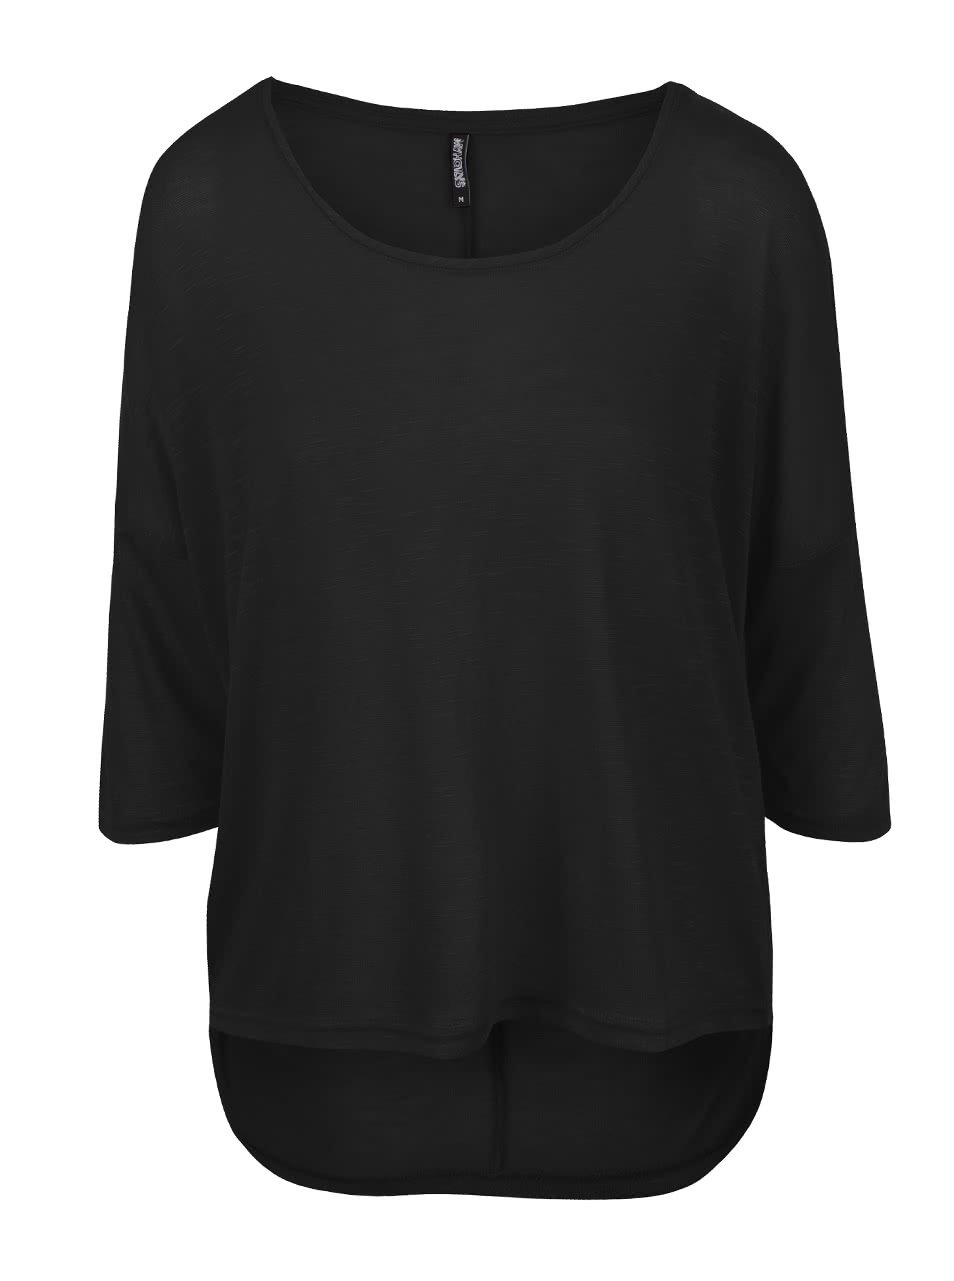 Černý lehký svetr s 3/4 rukávy Haily´s Laureen